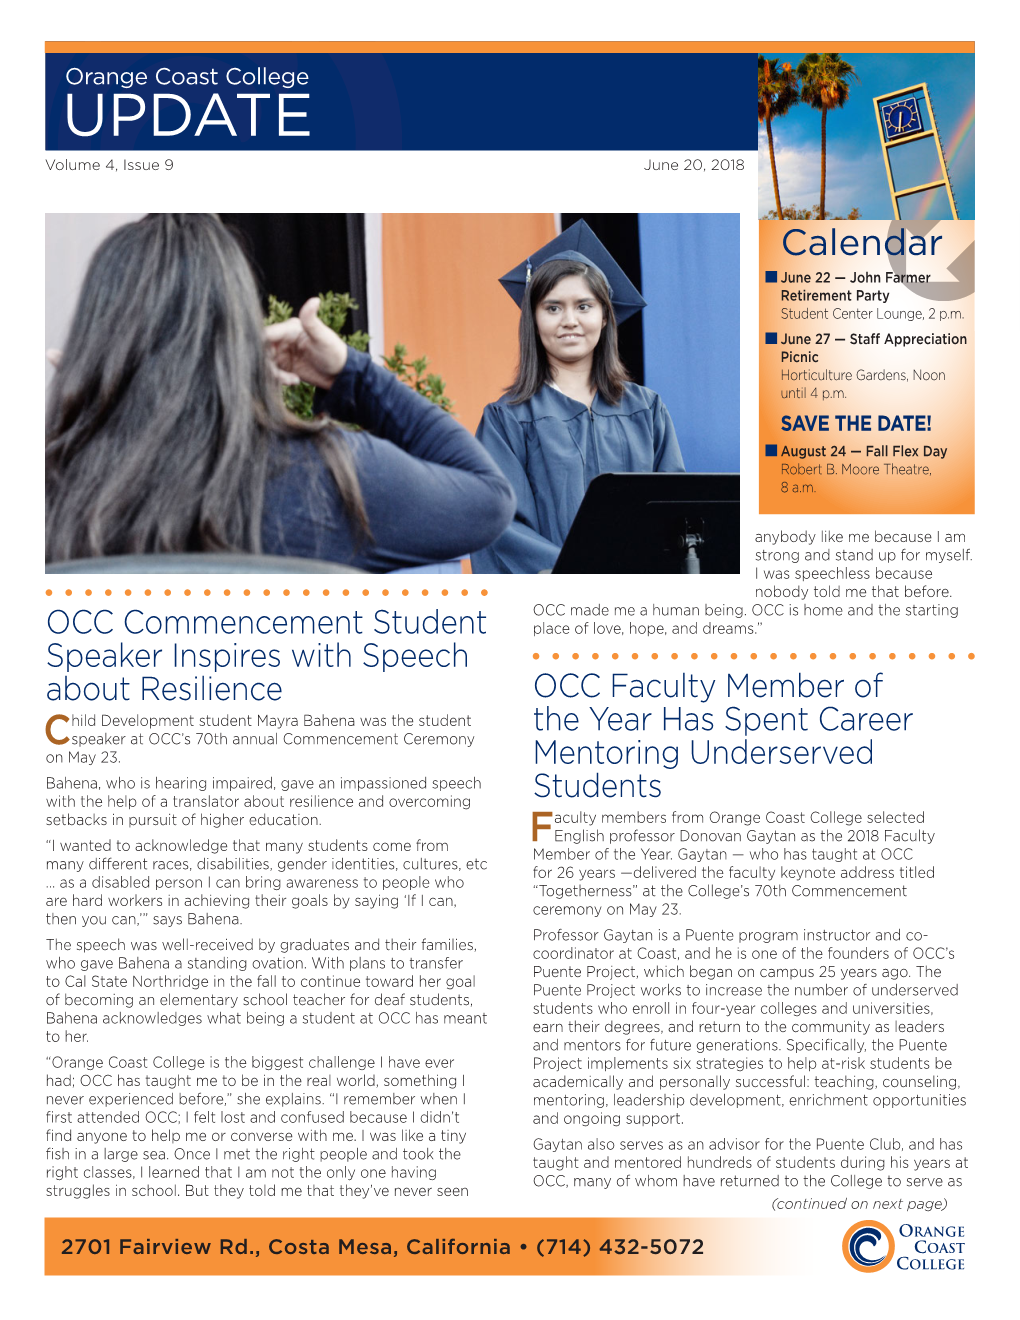 OCC Update Vol. 4 Issue 9